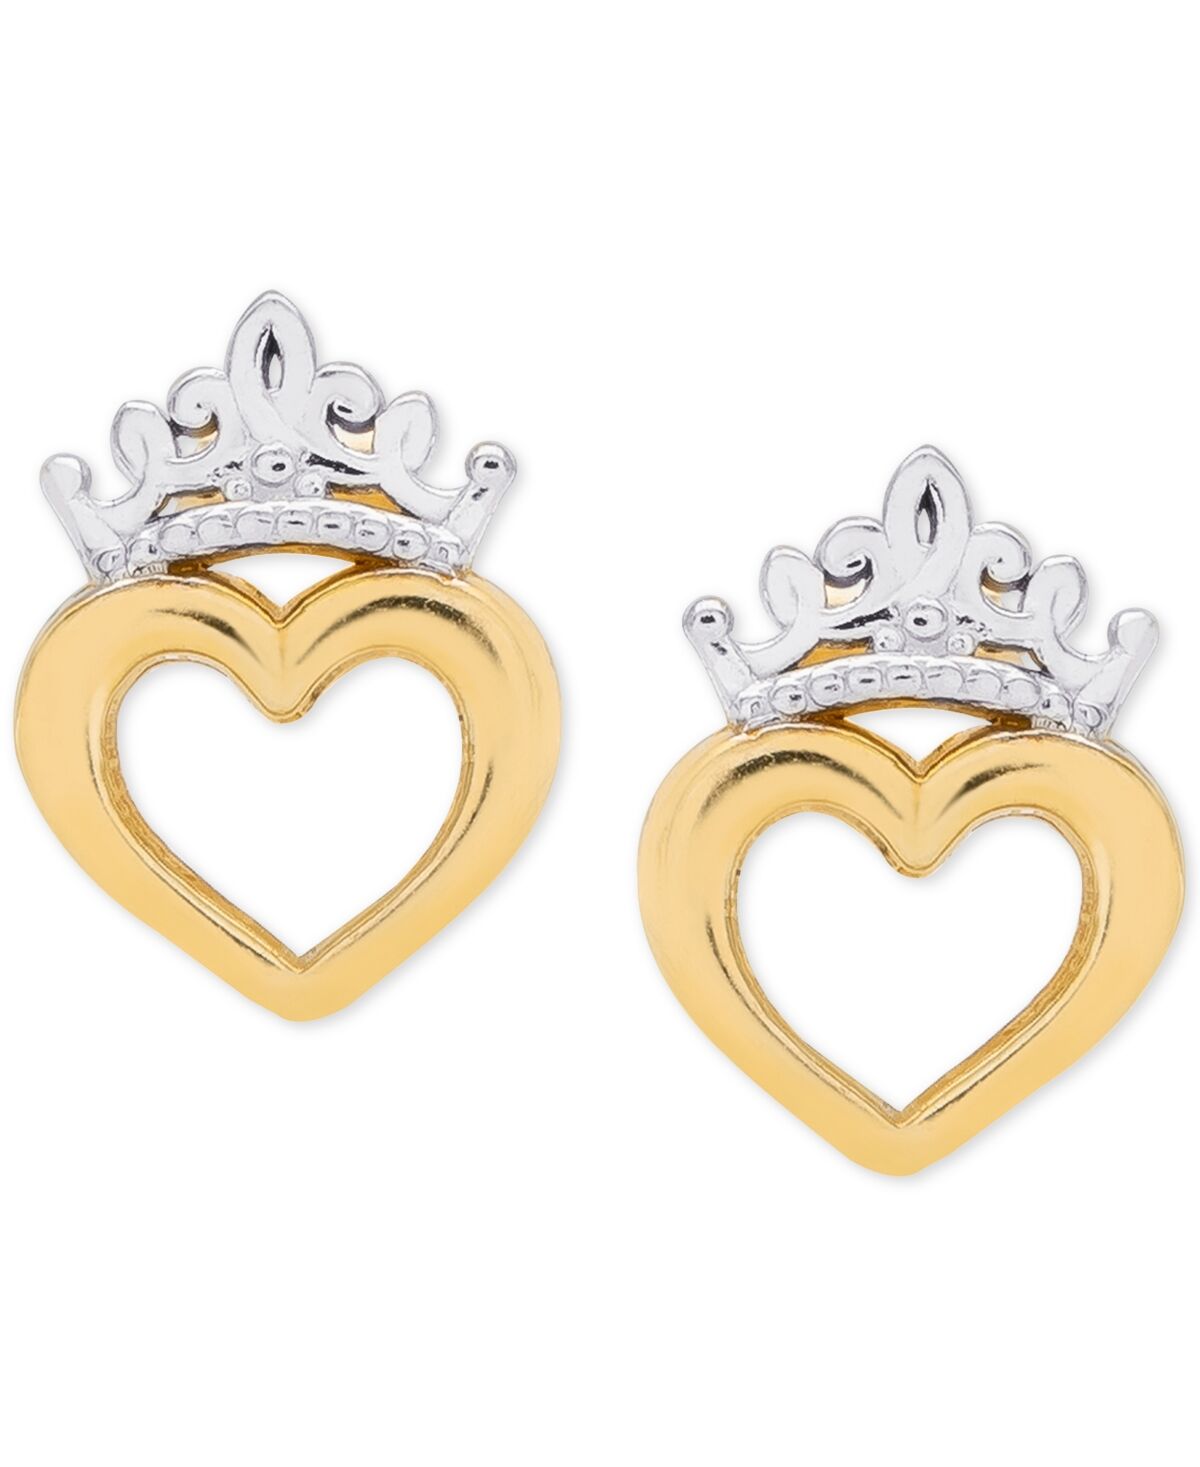 Disney Children's Tiara Heart Stud Earrings in 14k Gold - Yellow Gold